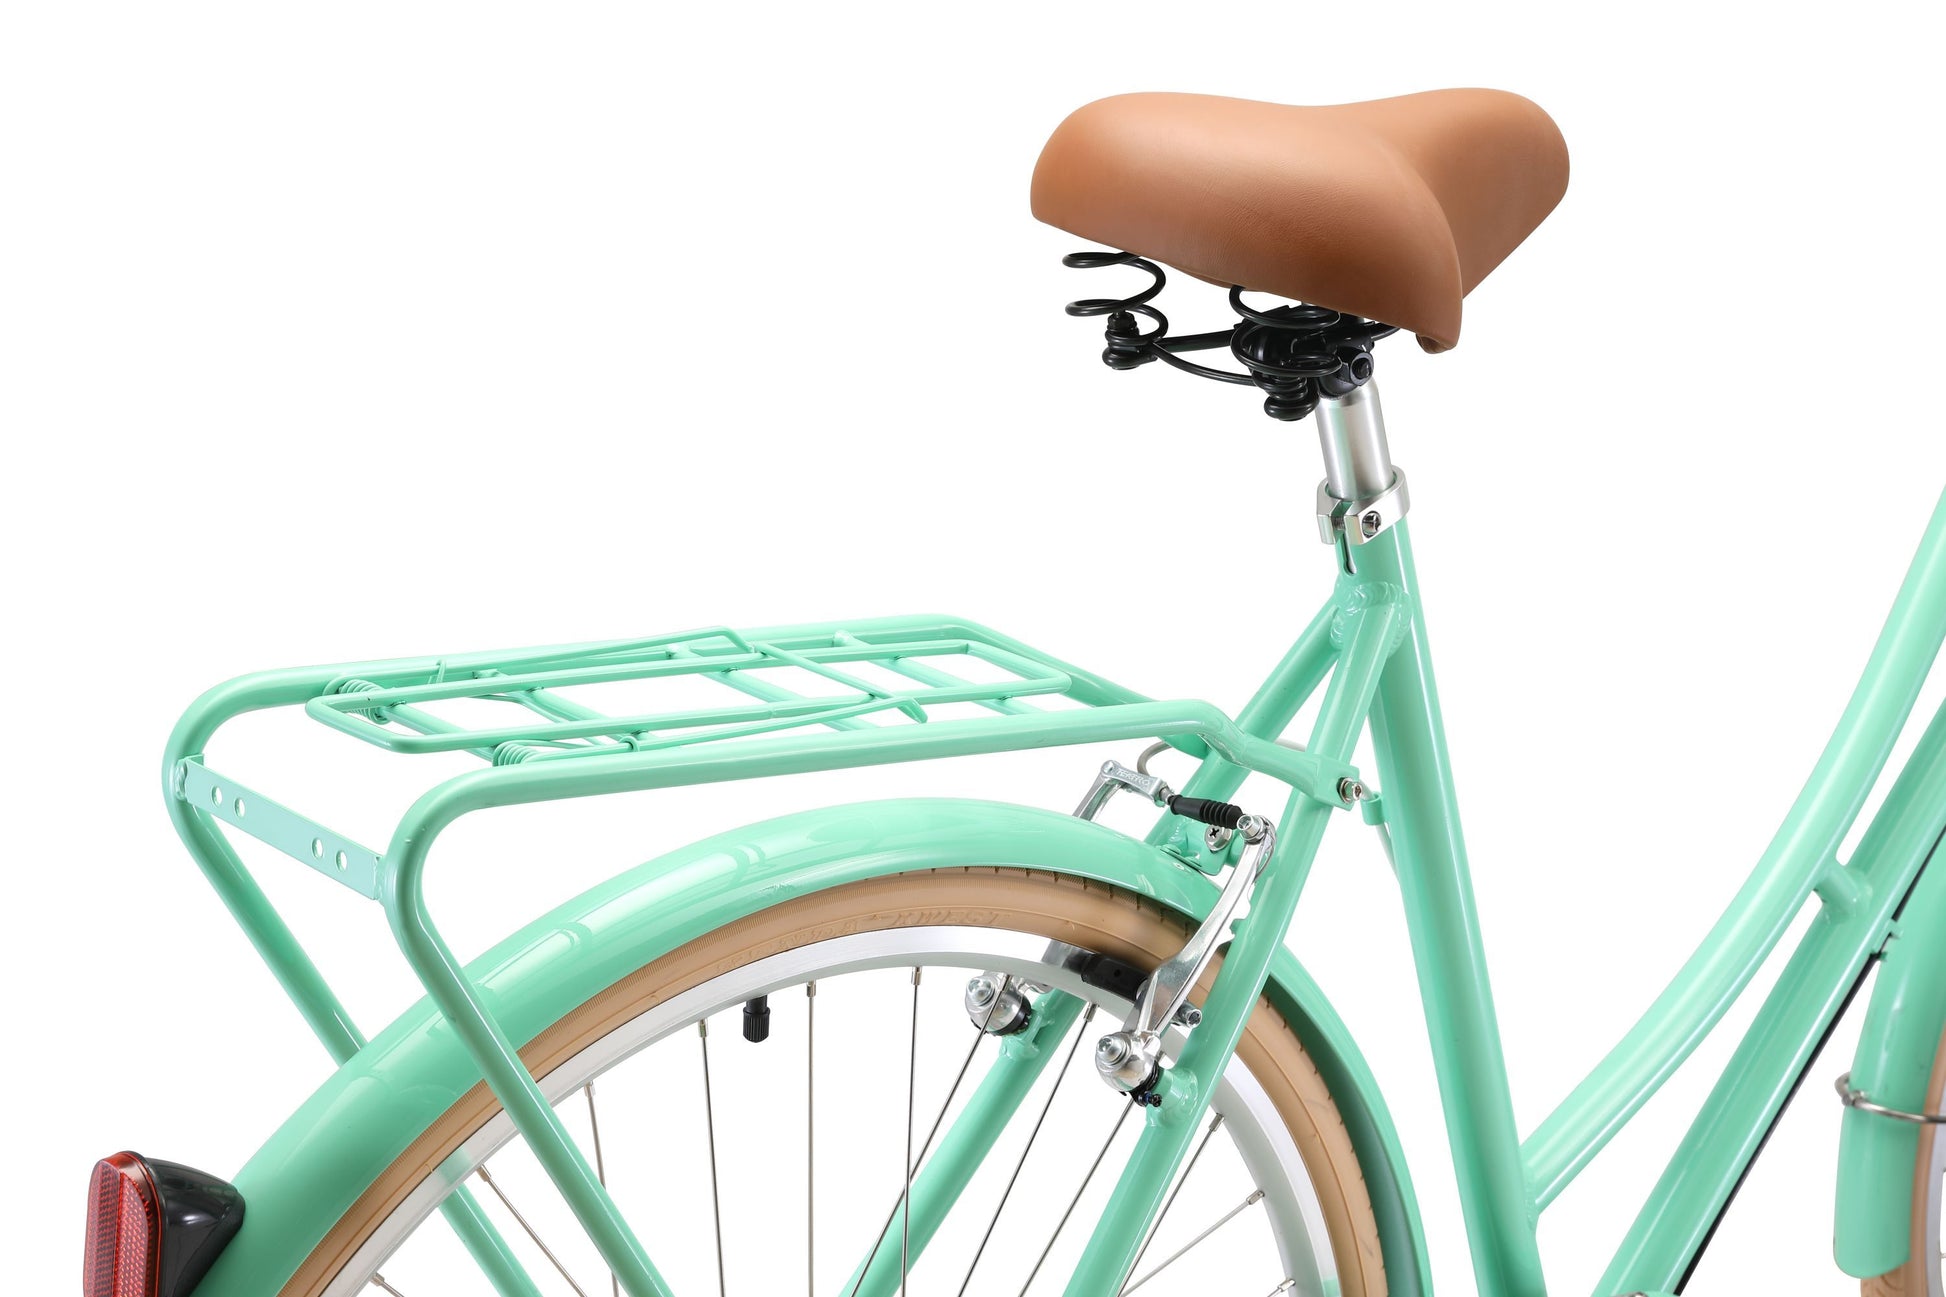 Ladies Deluxe Vintage Bike in Mint Green featuring rear pannier rack from Reid Cycles Australia